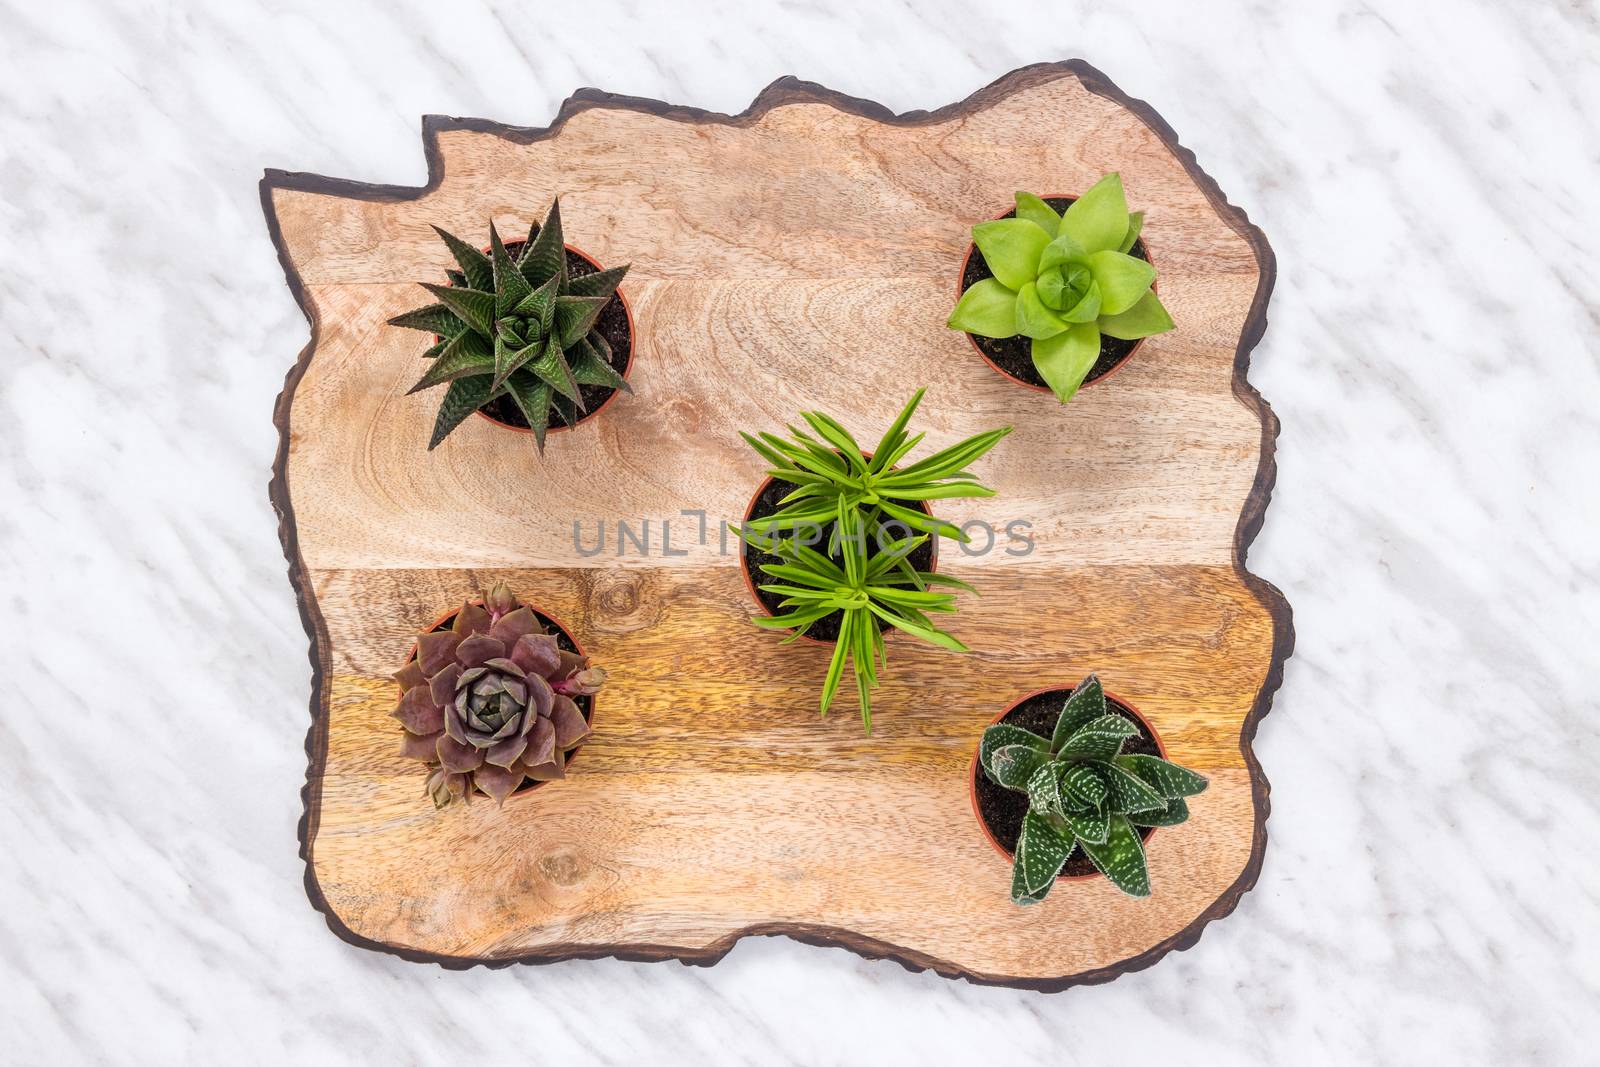 Little succulent plants on beautiful wooden surface by anikasalsera